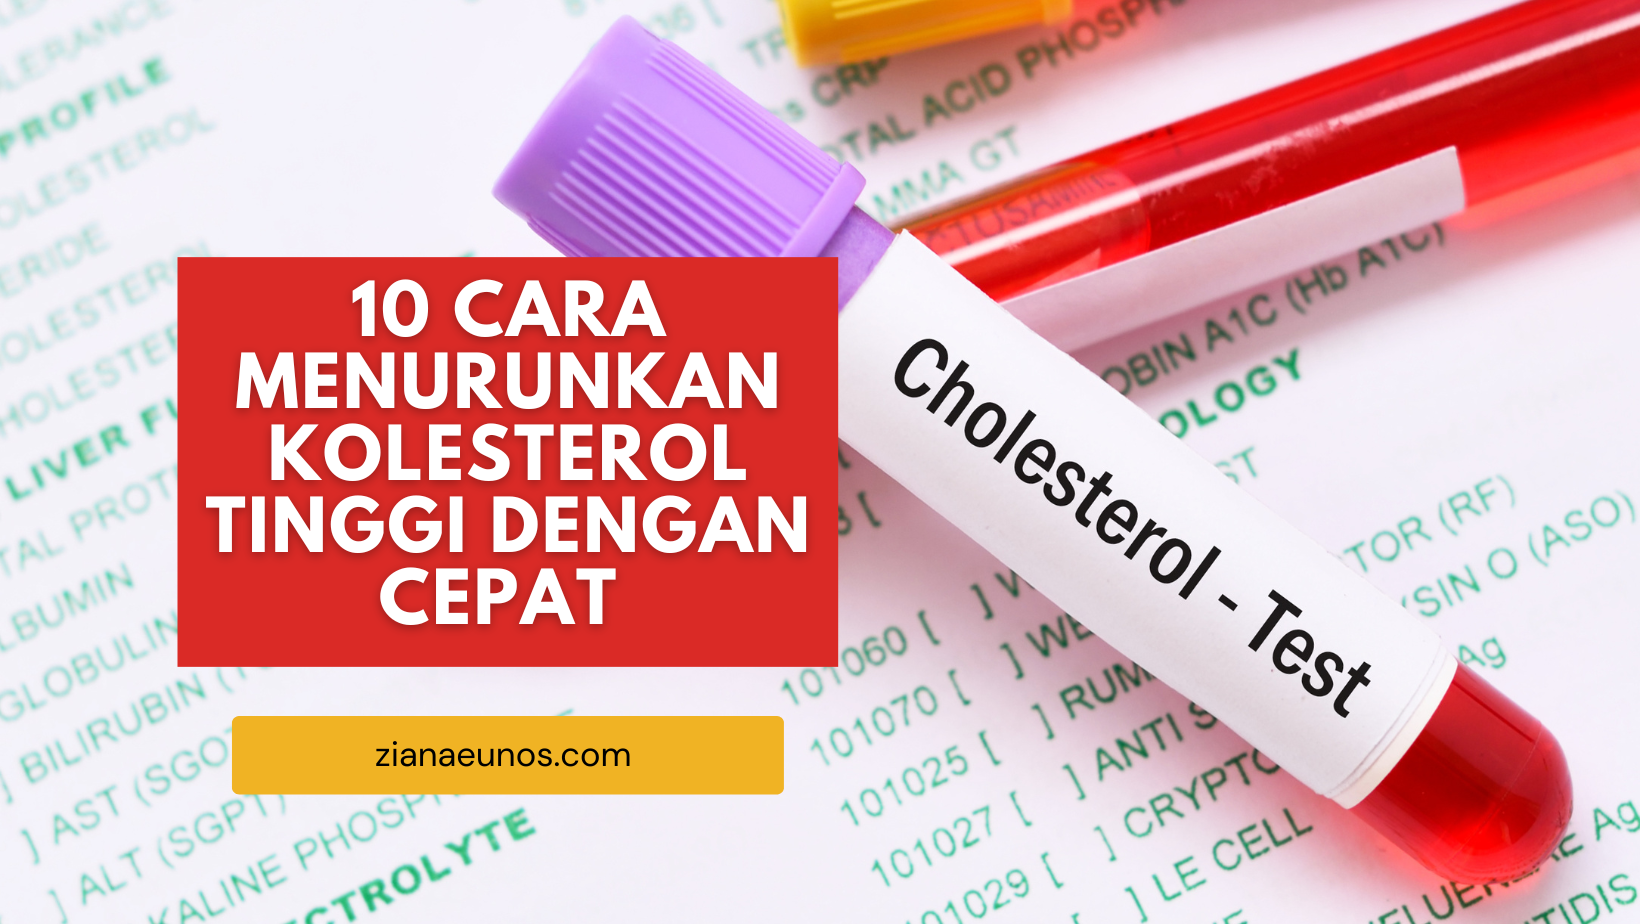 Cara menurunkan kolesterol tinggi dengan cepat